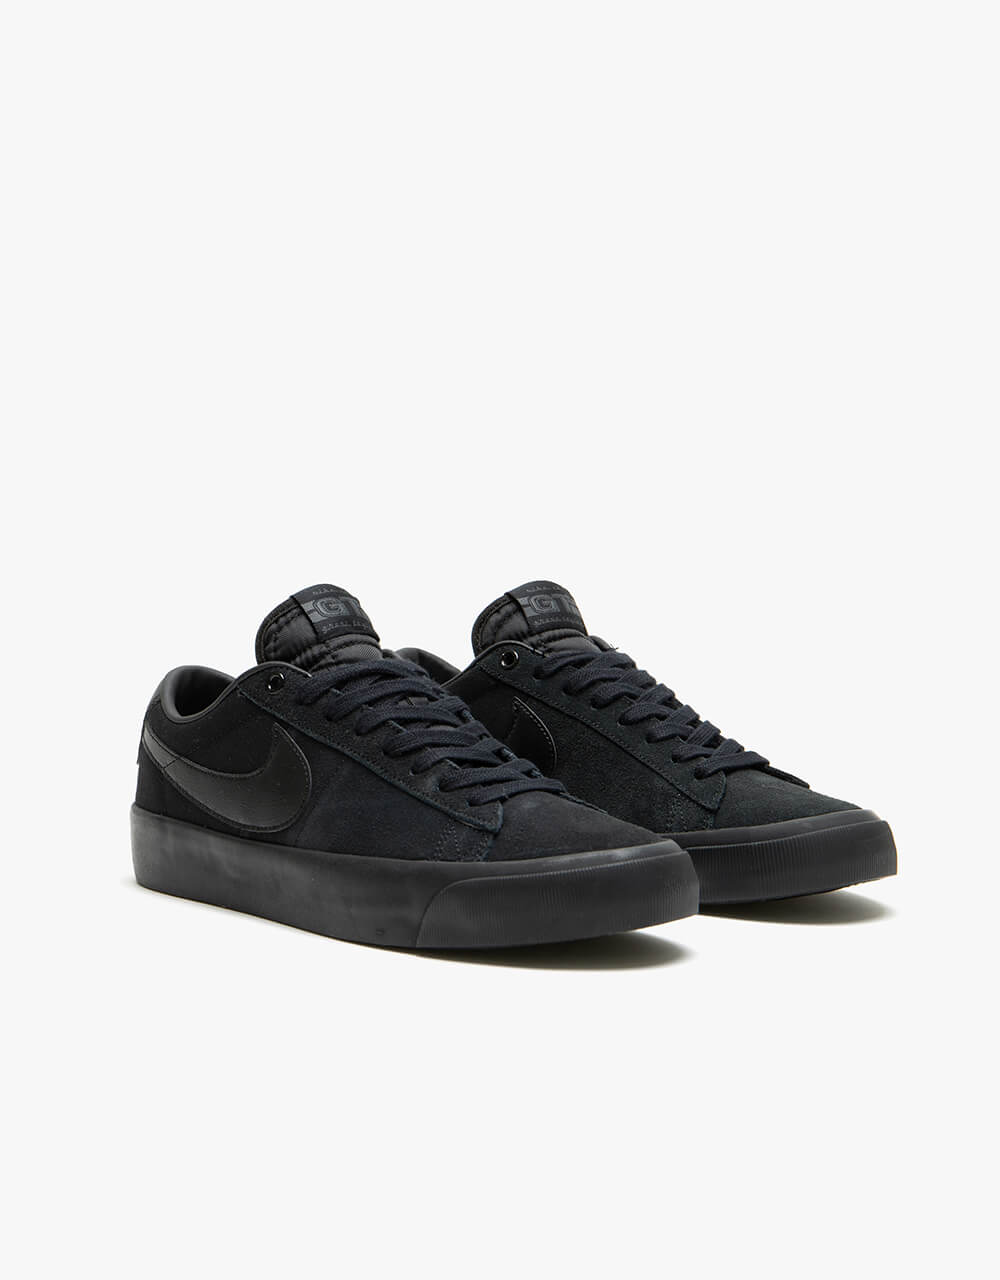 Nike SB Zoom Blazer Low Pro GT Skate Shoes - Black/Black-Black-Anthracite